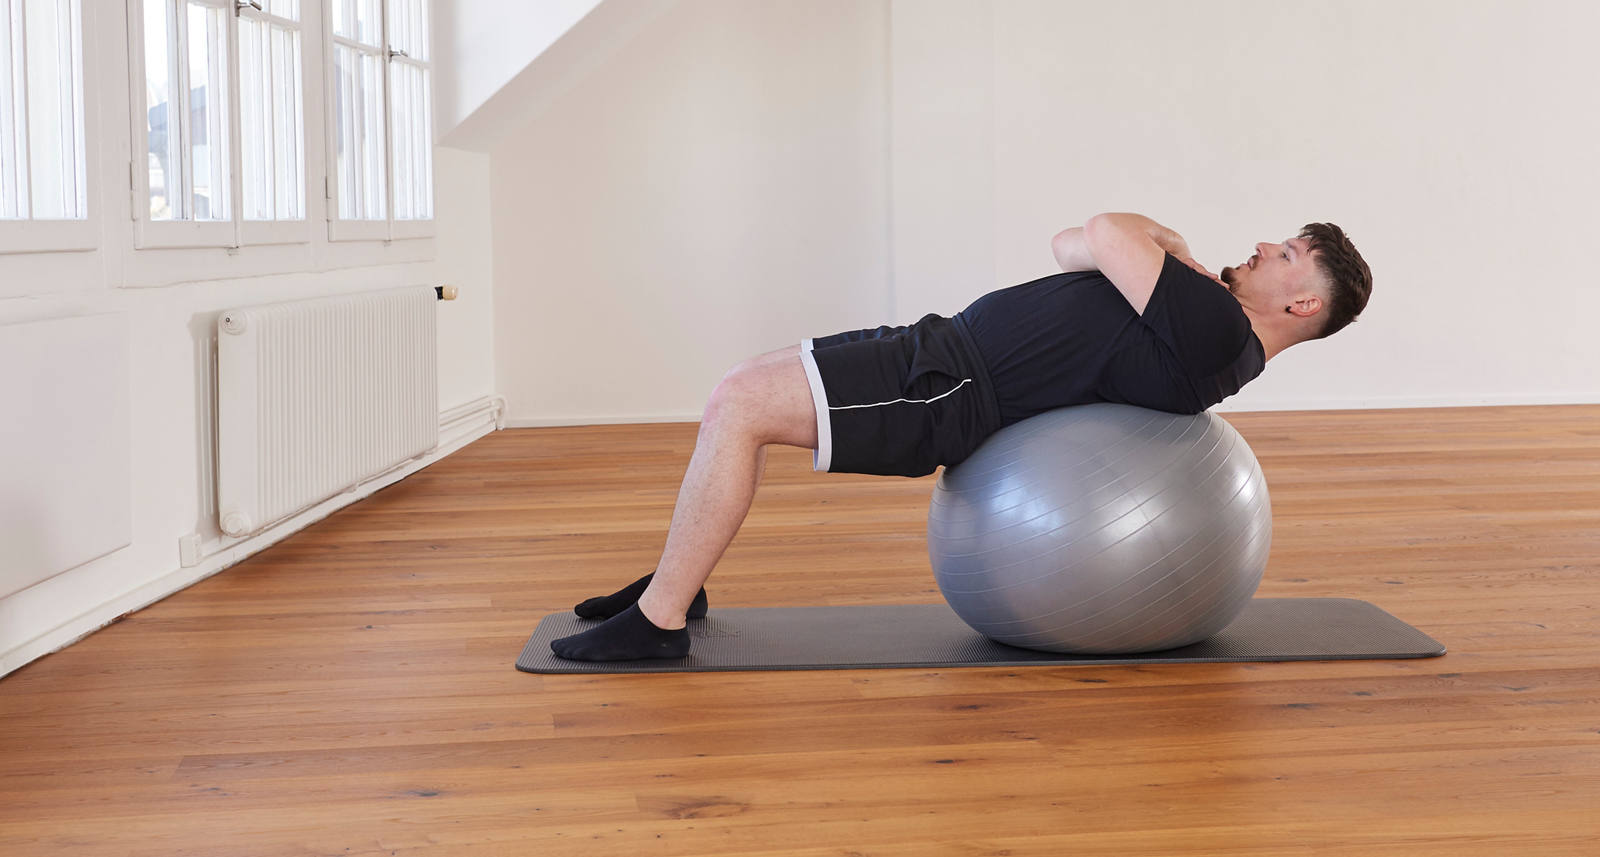 Gymnastic ball – Abdomen muscles: Position 1